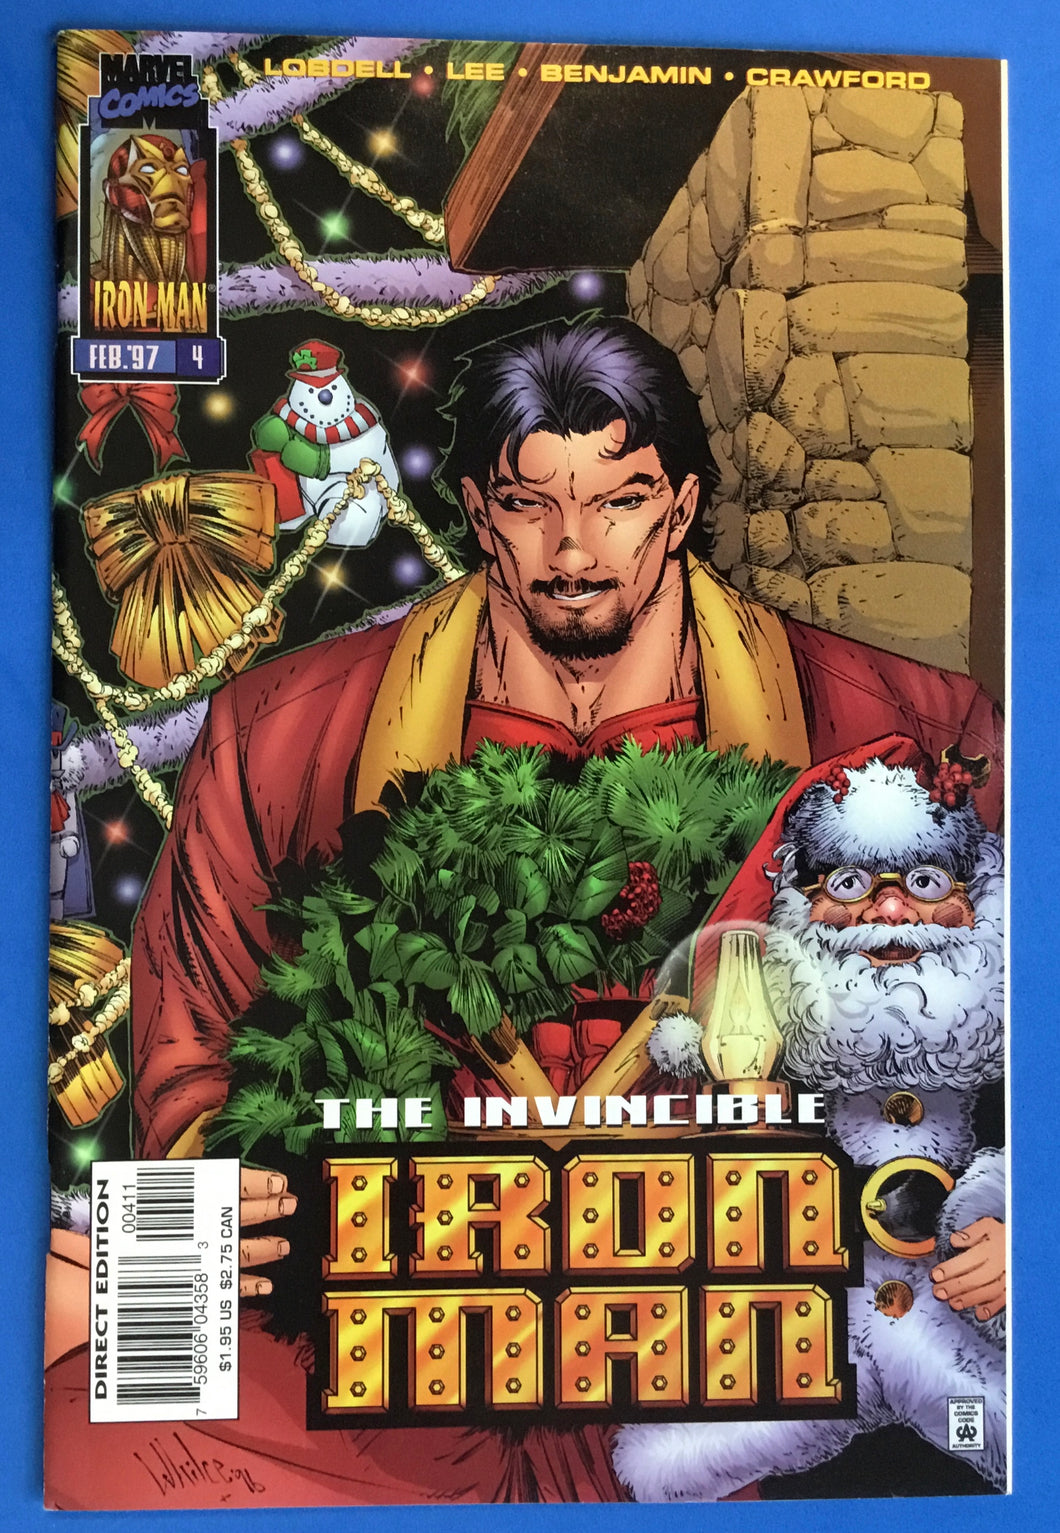 The invincible Iron Man Volume 2 No. #4 1997